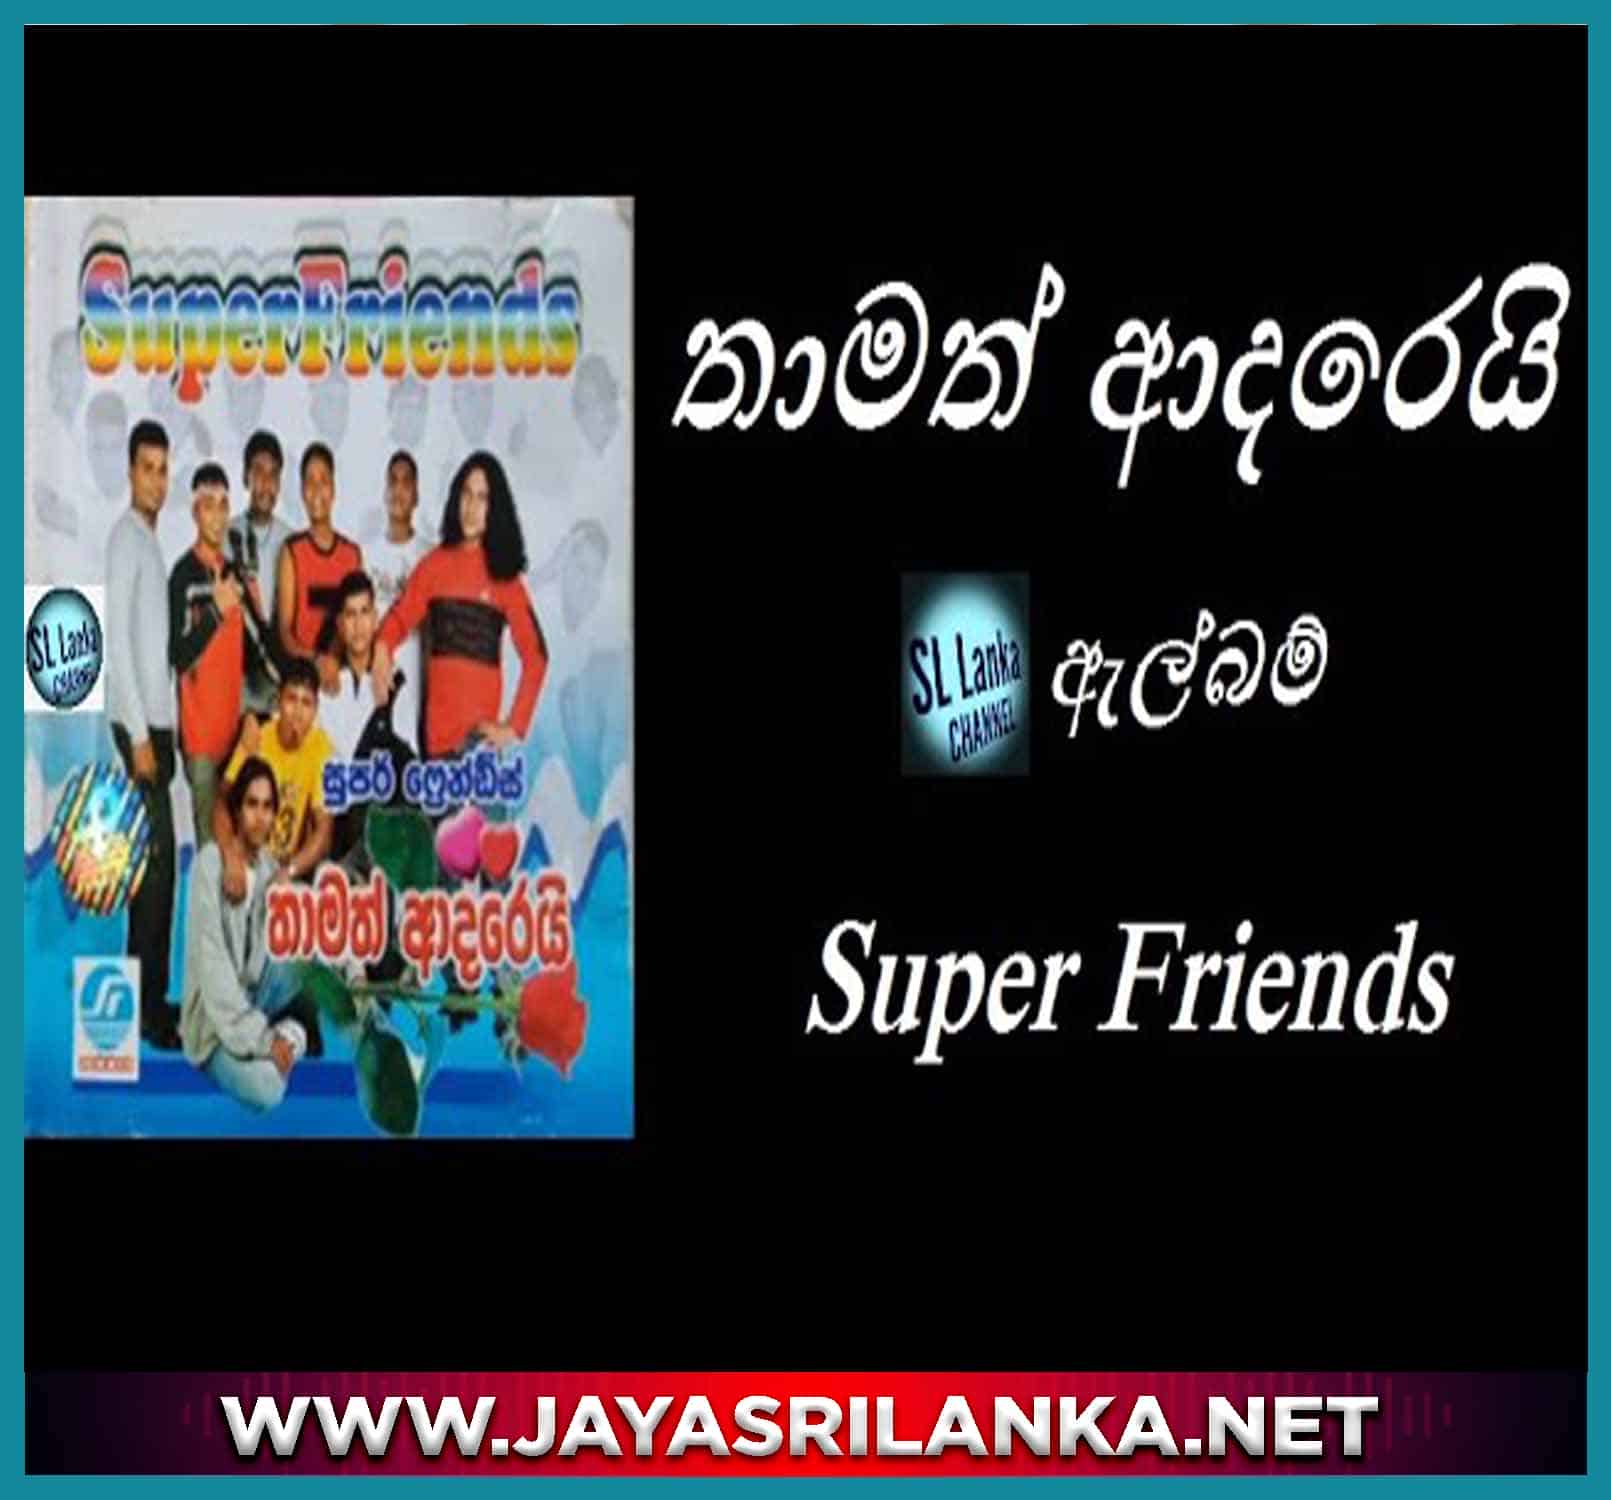 Issara Widihata Obawa Waladagena - Super Friends mp3 Image